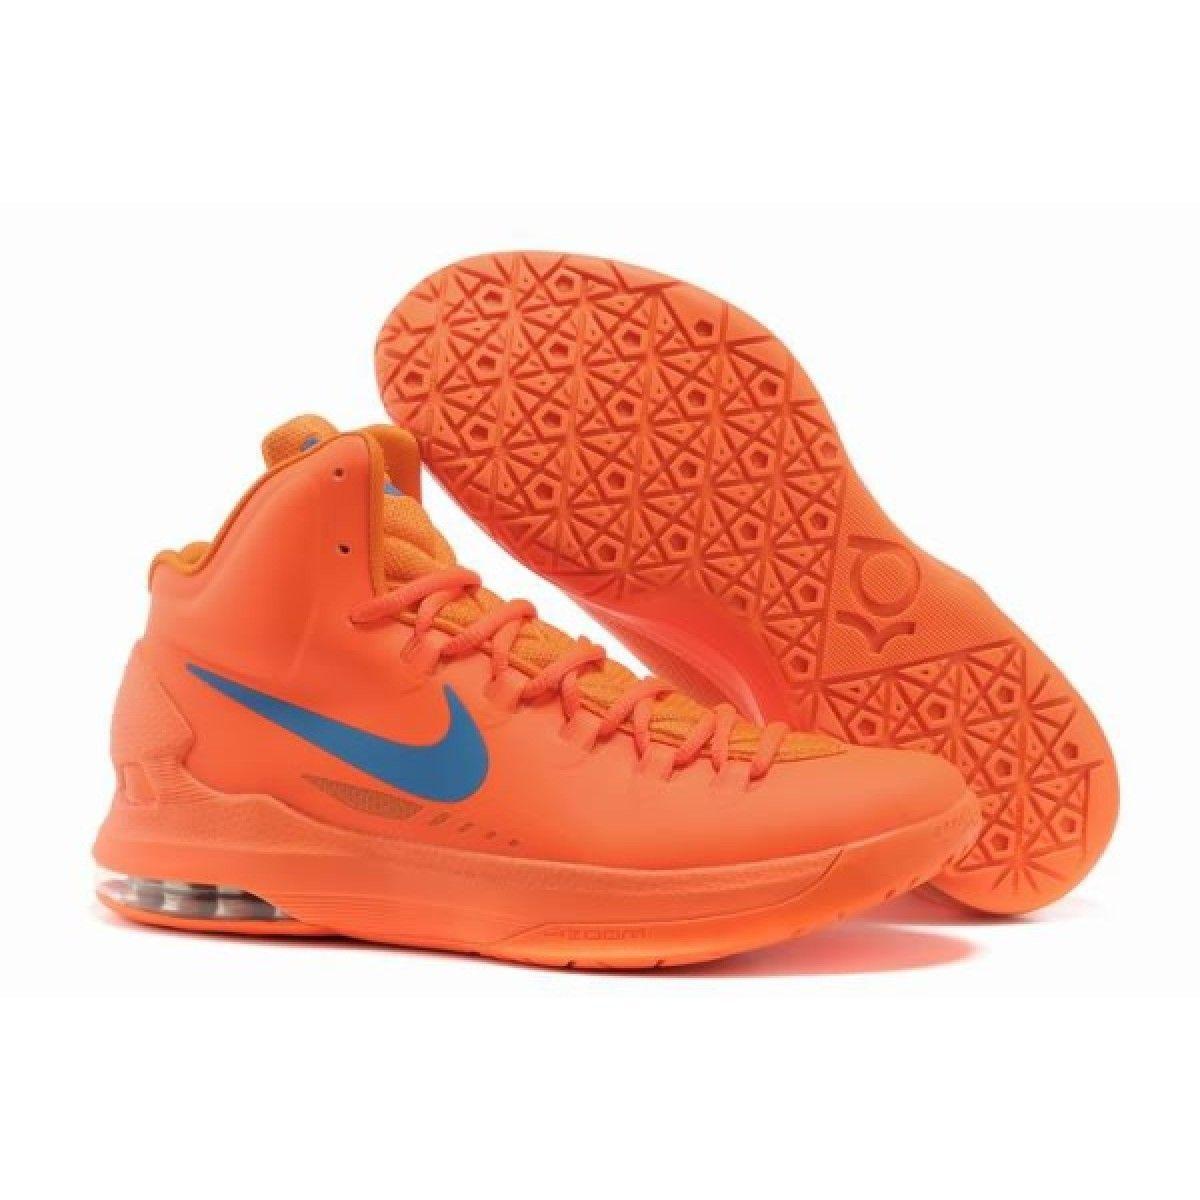 Nike Basketball Shoes 2015 HD